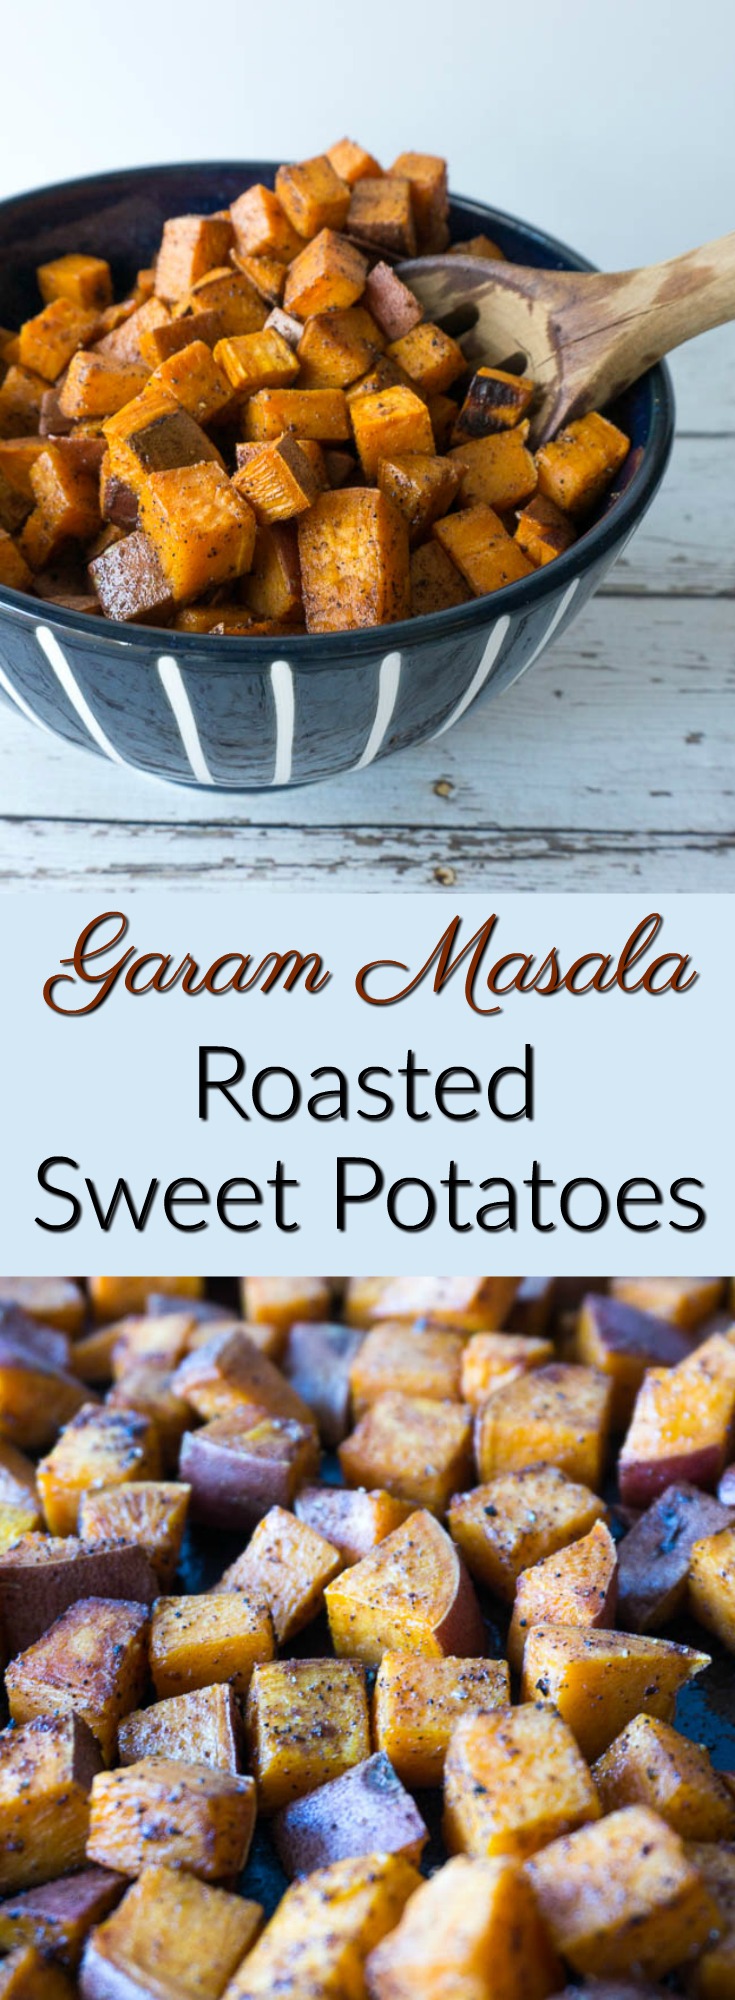 garam masala roasted sweet potatoes